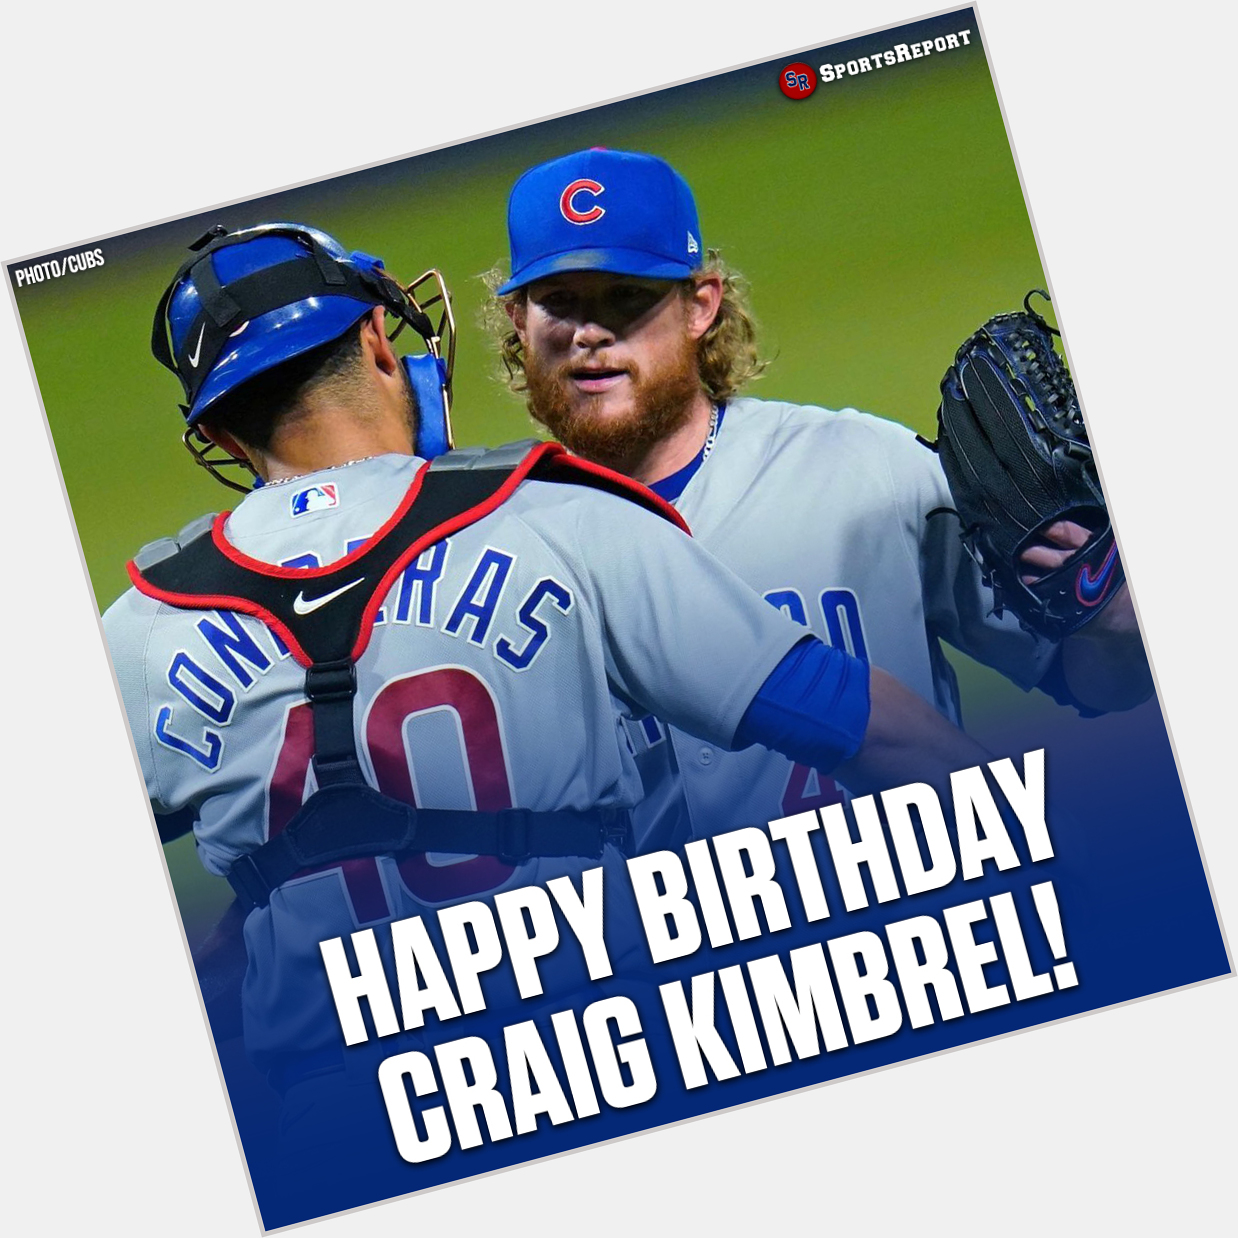  Fans, let\s wish Craig Kimbrel a Happy Birthday! 